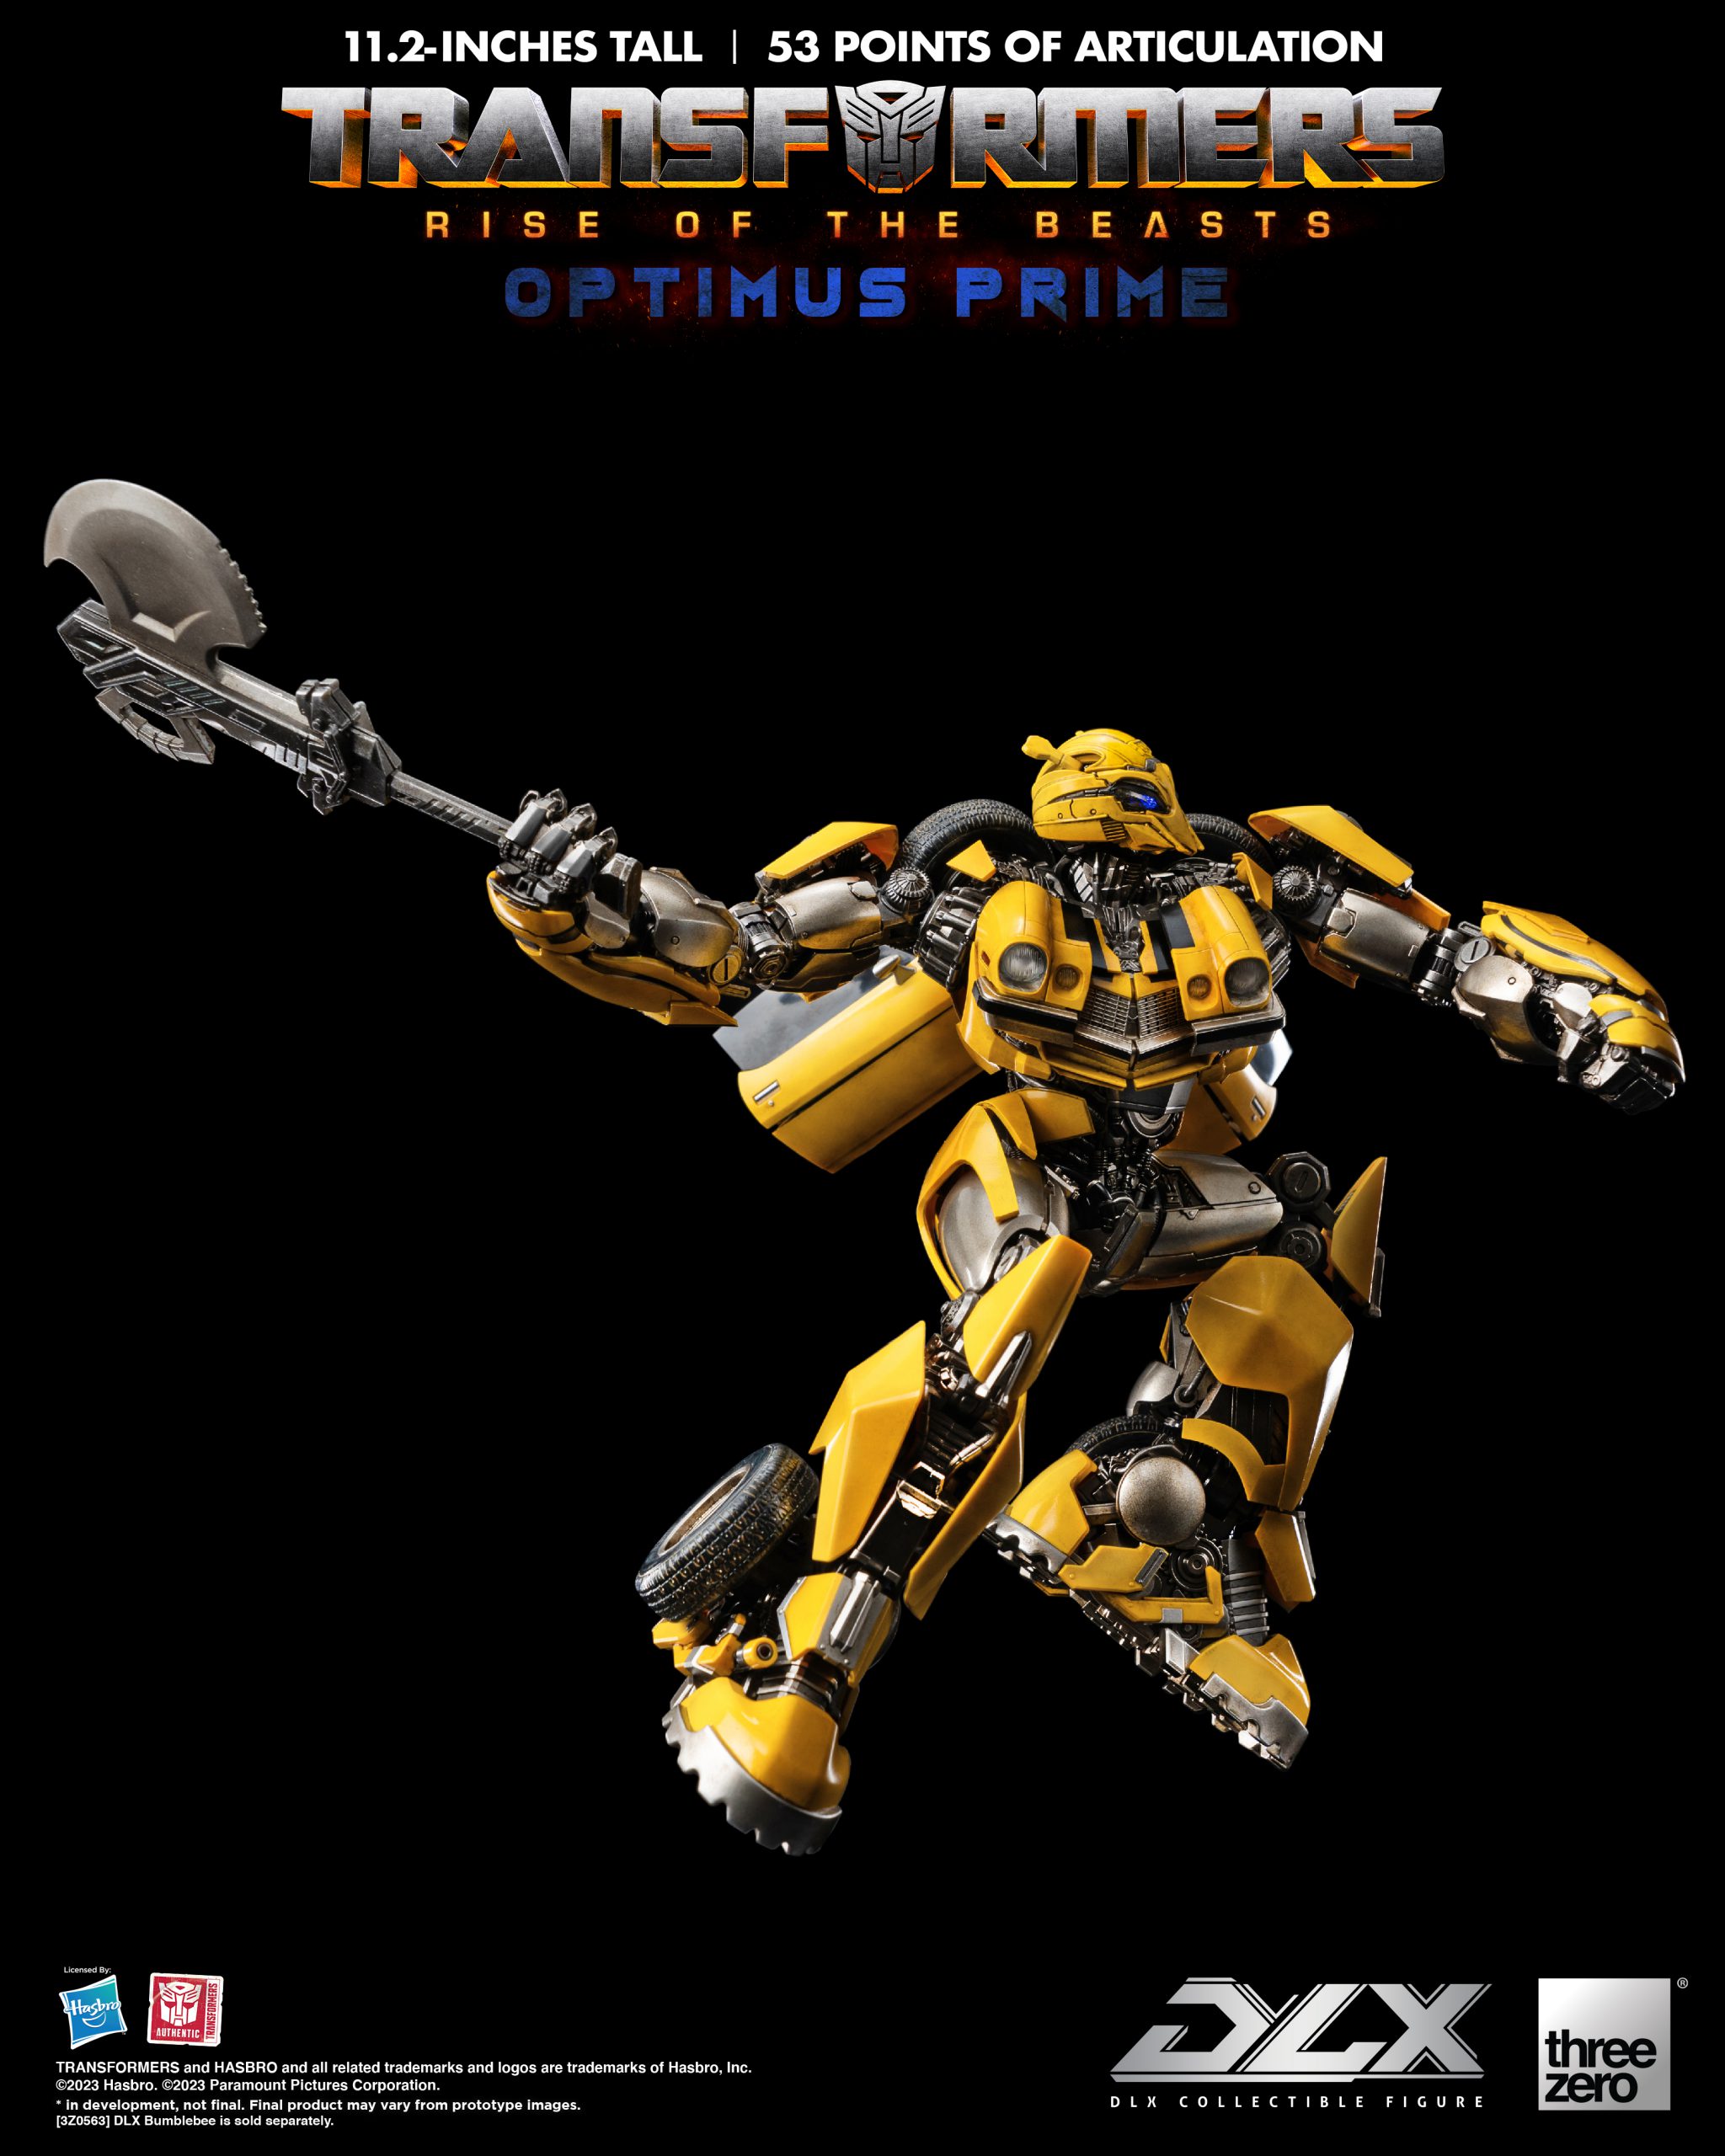 Bumblebee Movie - DLX Optimus Prime Collectible Figure